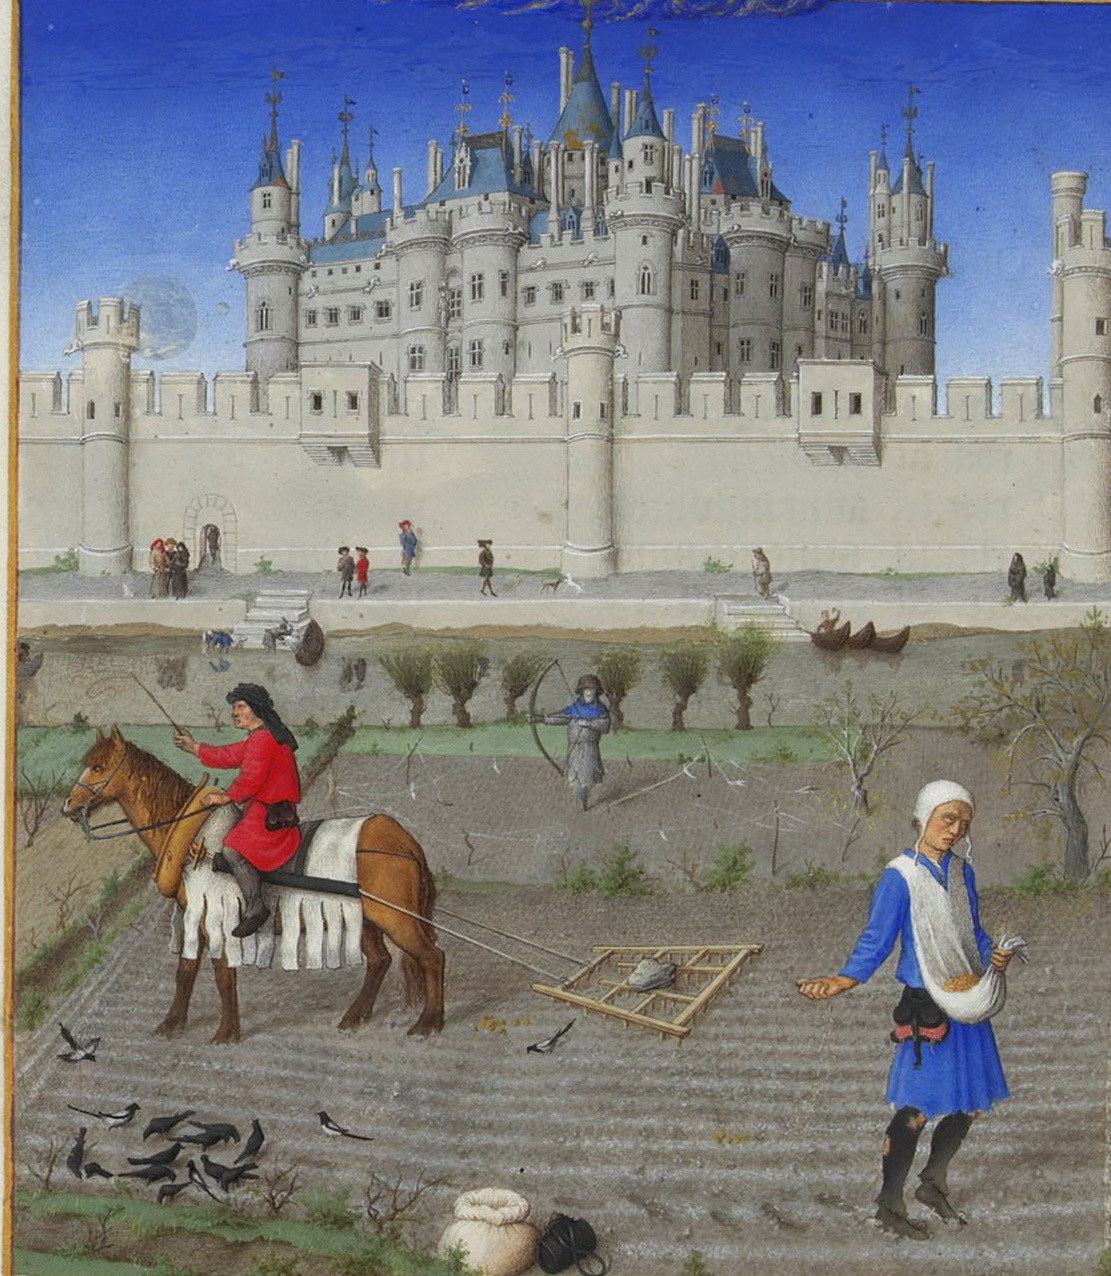 Вид на Луврский замок с юга. Миниатюра из «Великолепного часослова герцога Беррийского», XV век